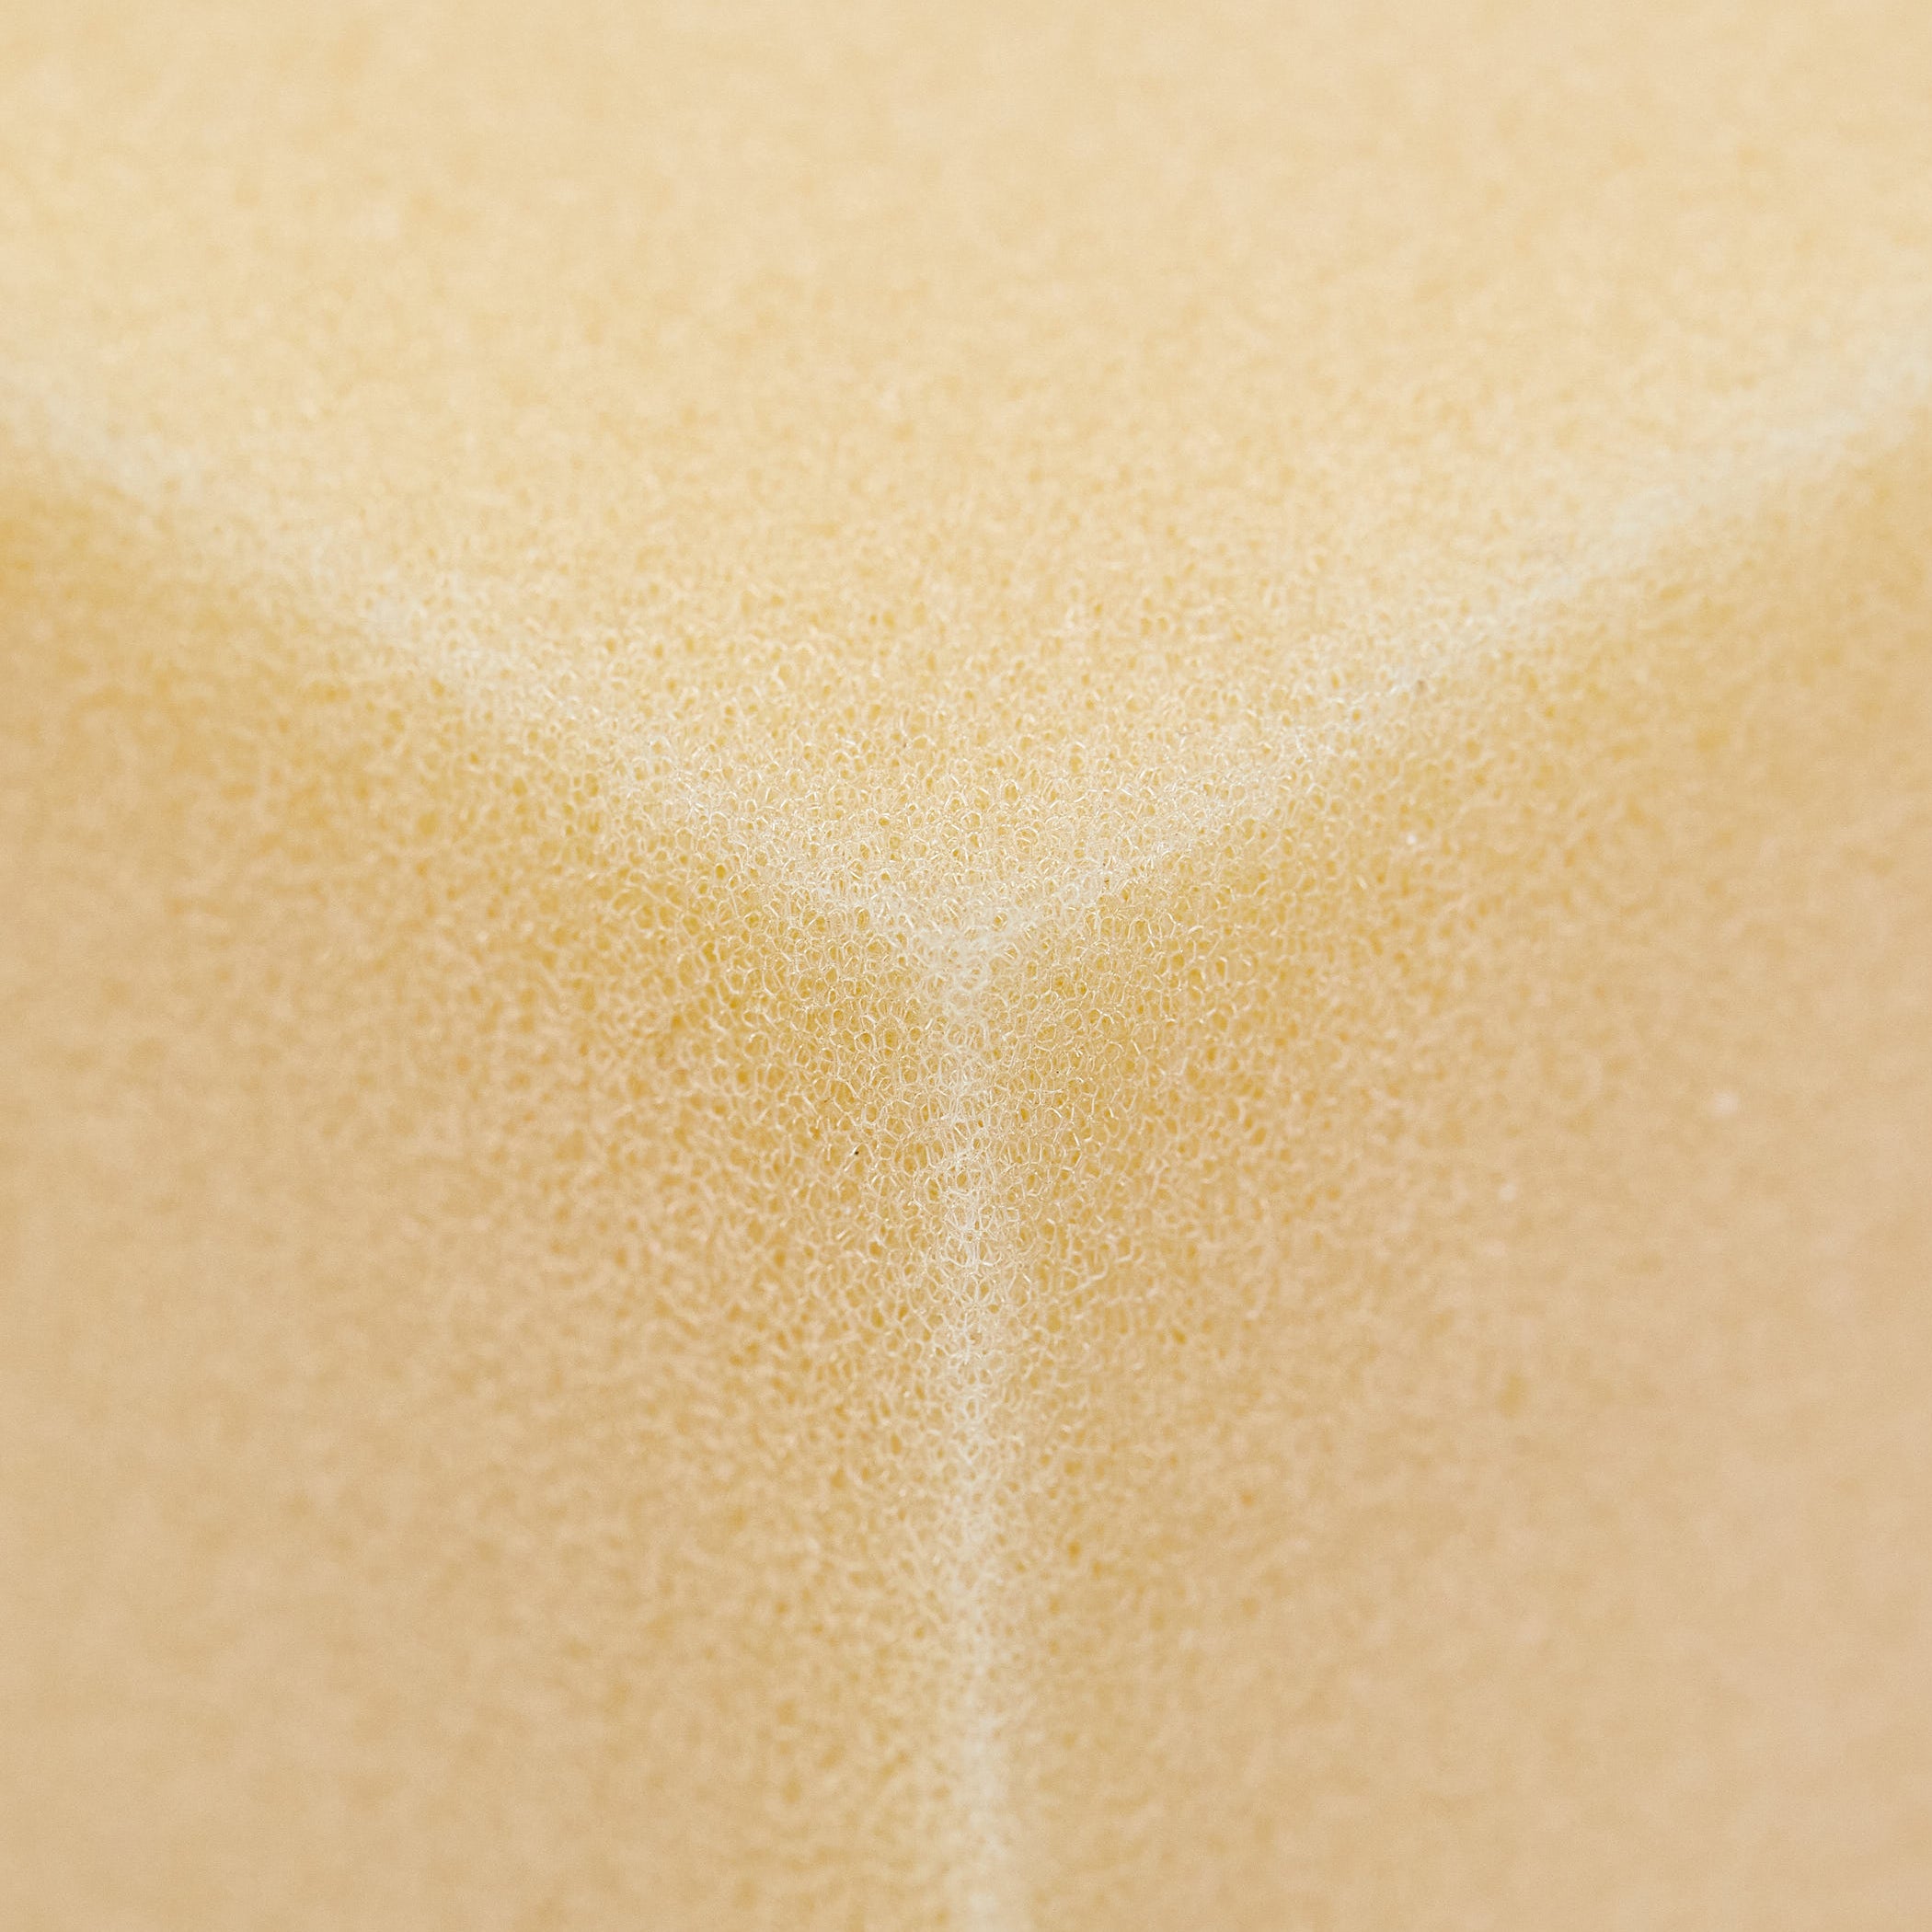 Close up of foam material